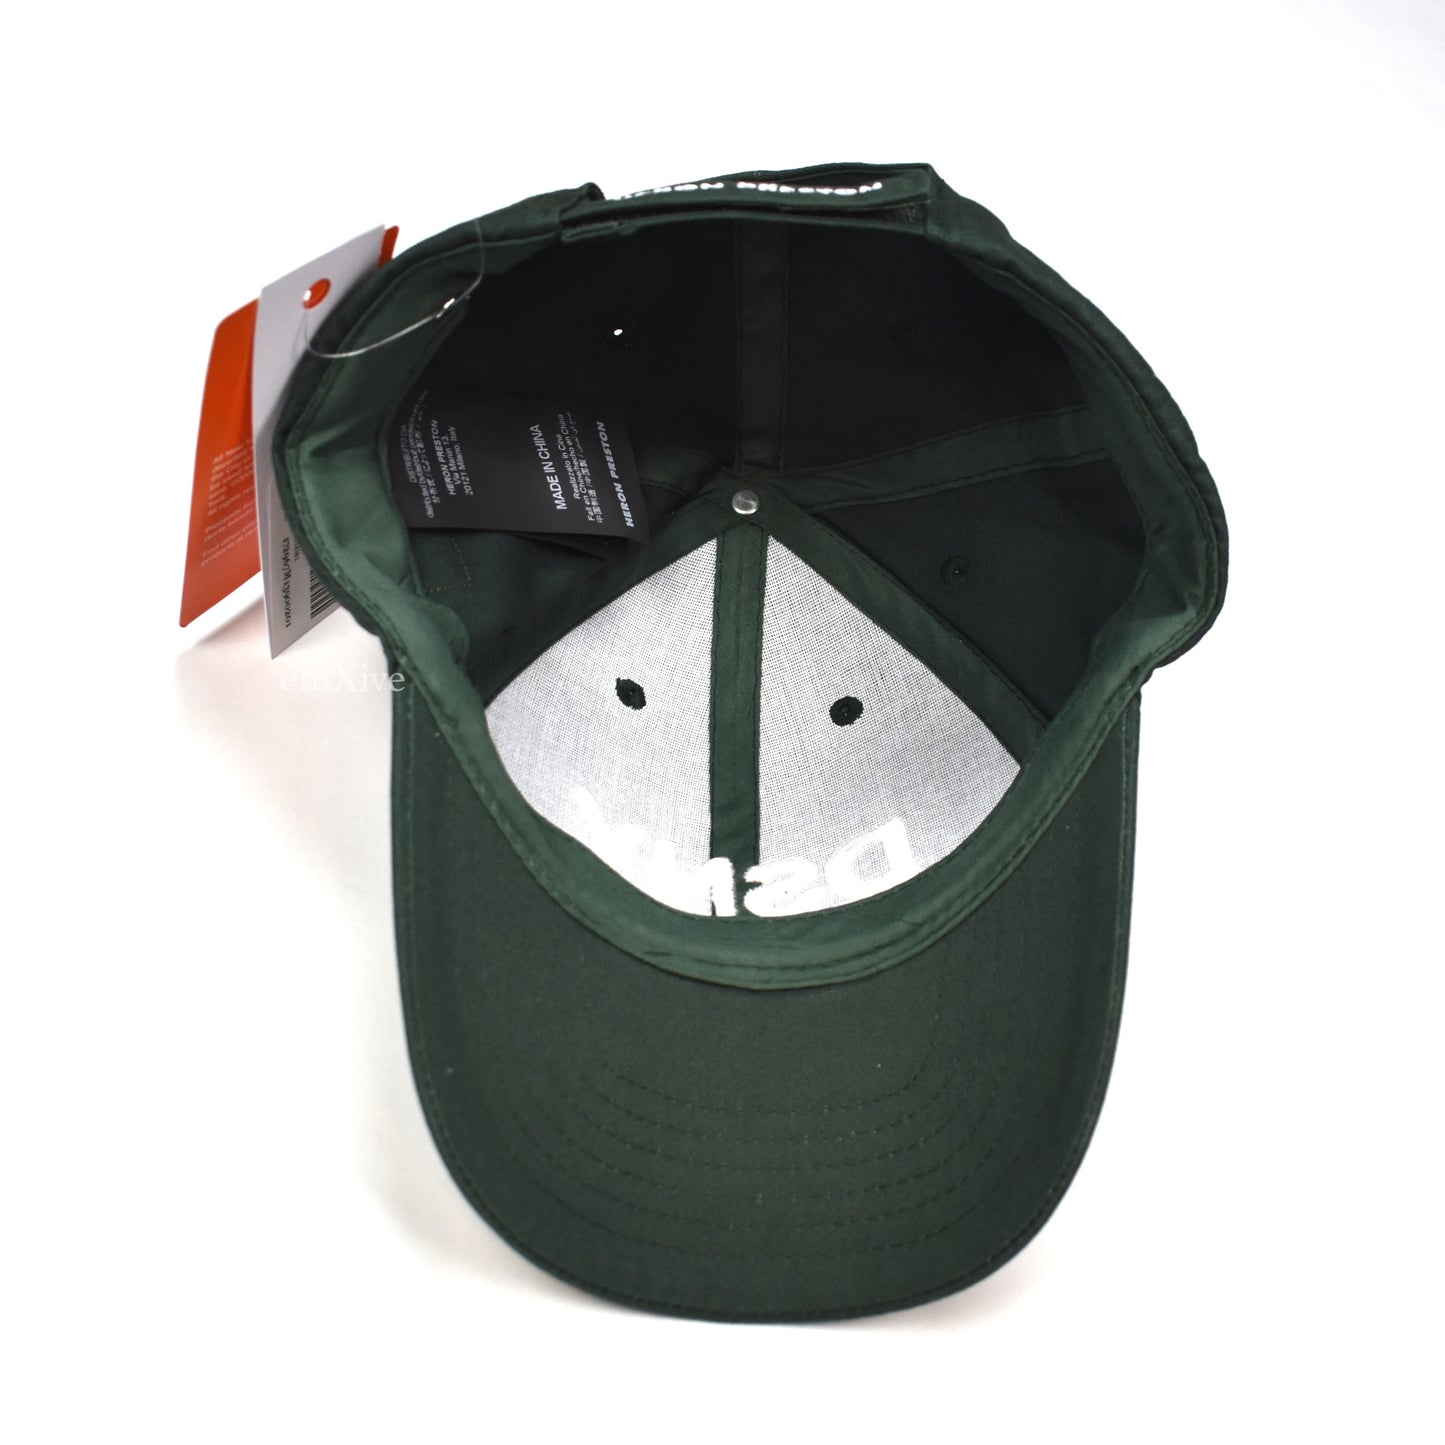 Heron Preston - Green DSNY Embroidered Hat